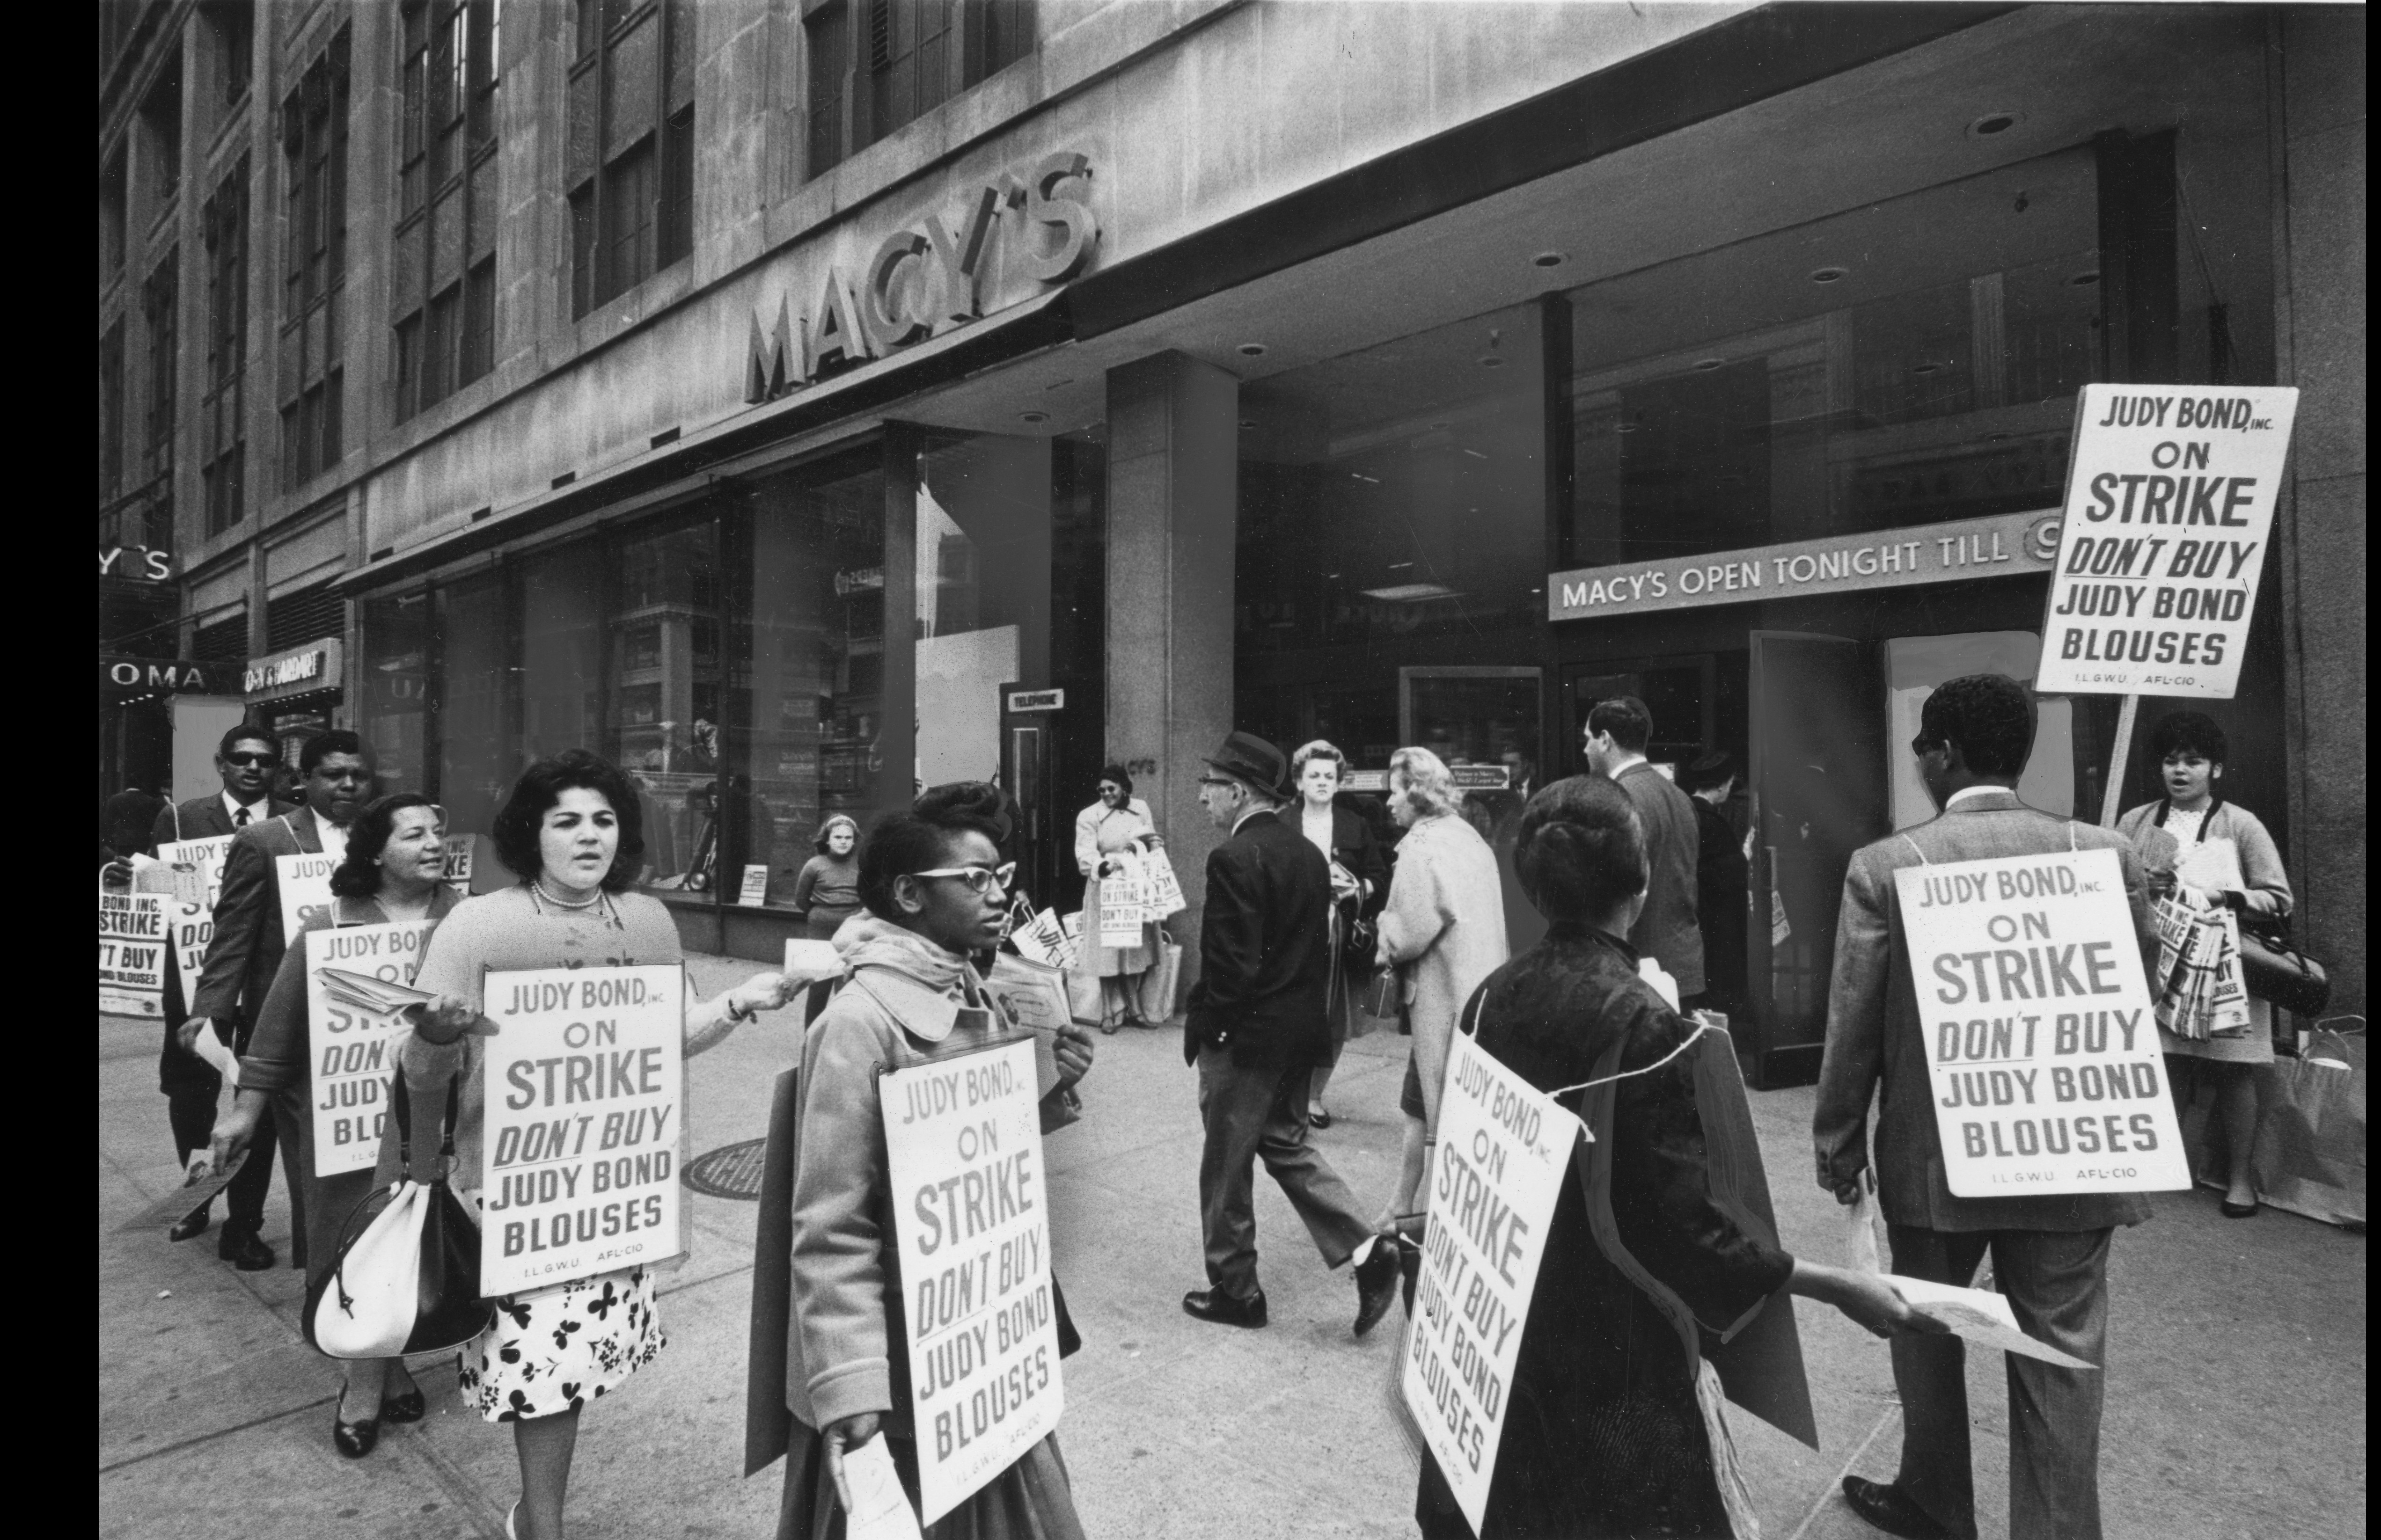 Striking workers outside of Macy's, picketing Judy Bond, Inc